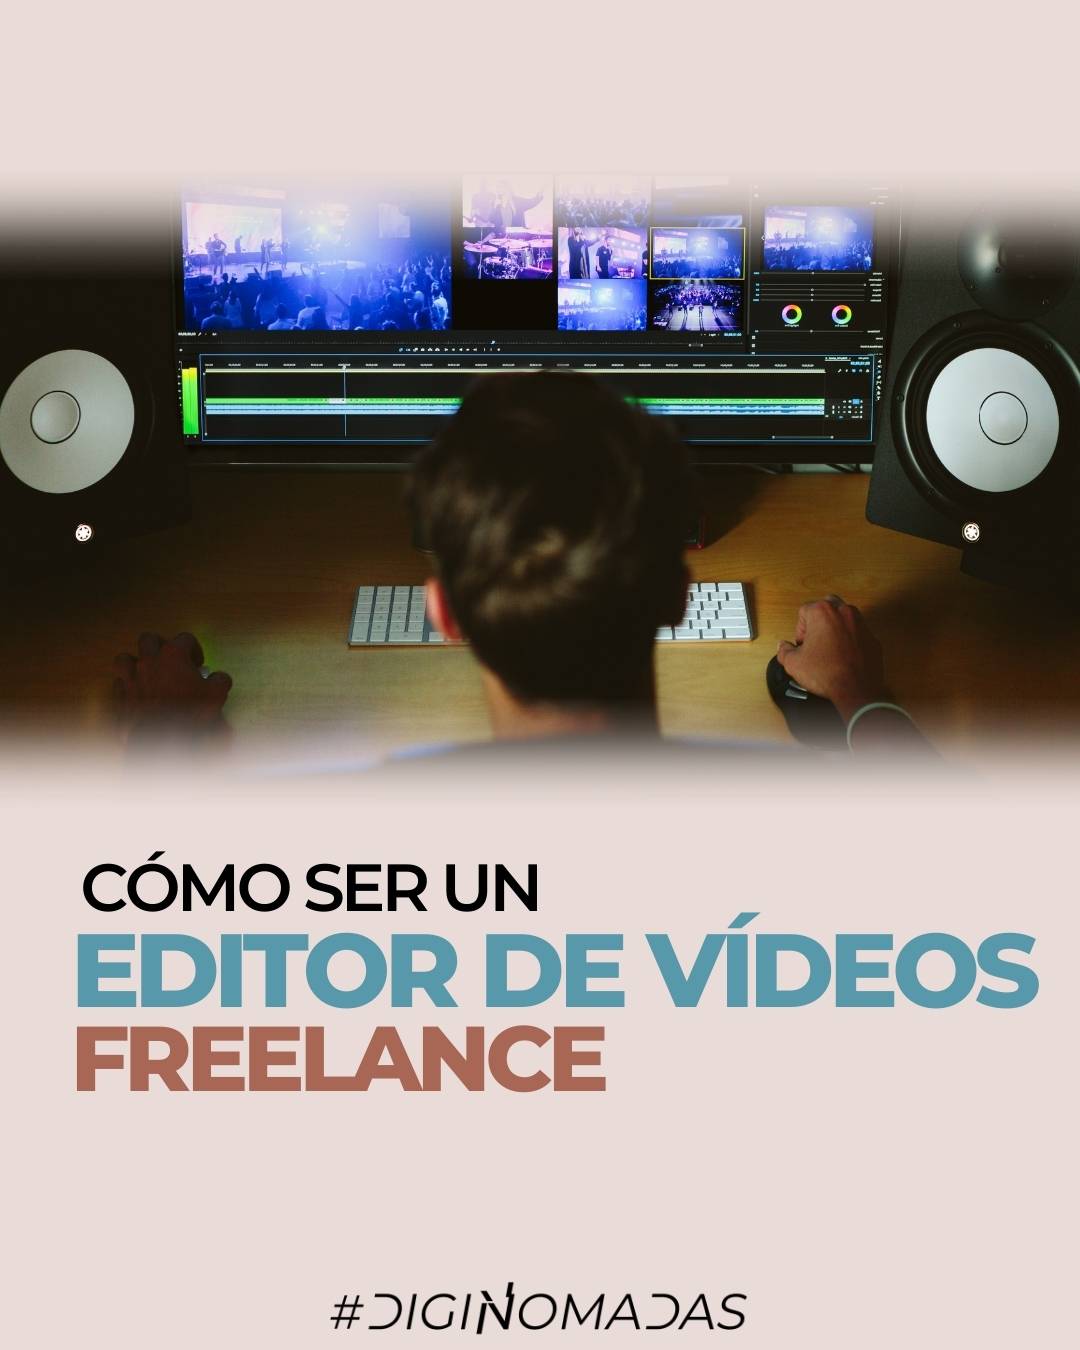 Cómo ser un editor de videos profesional freelance